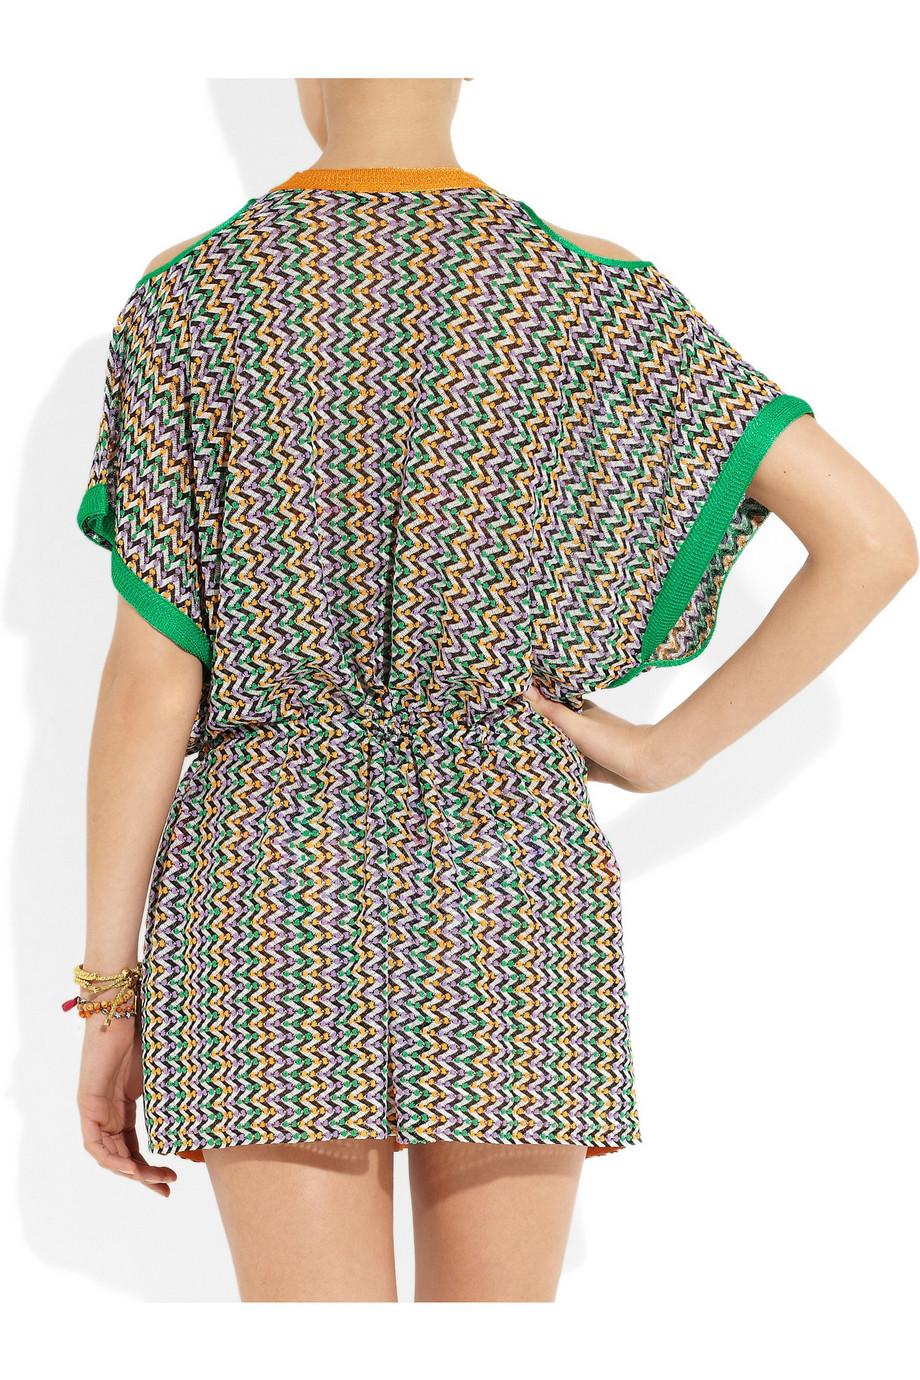 NEW Missoni Multicolor Chevron ZigZag Crochet Knit Kaftan Tunic CoverUp Dress 40 For Sale 1